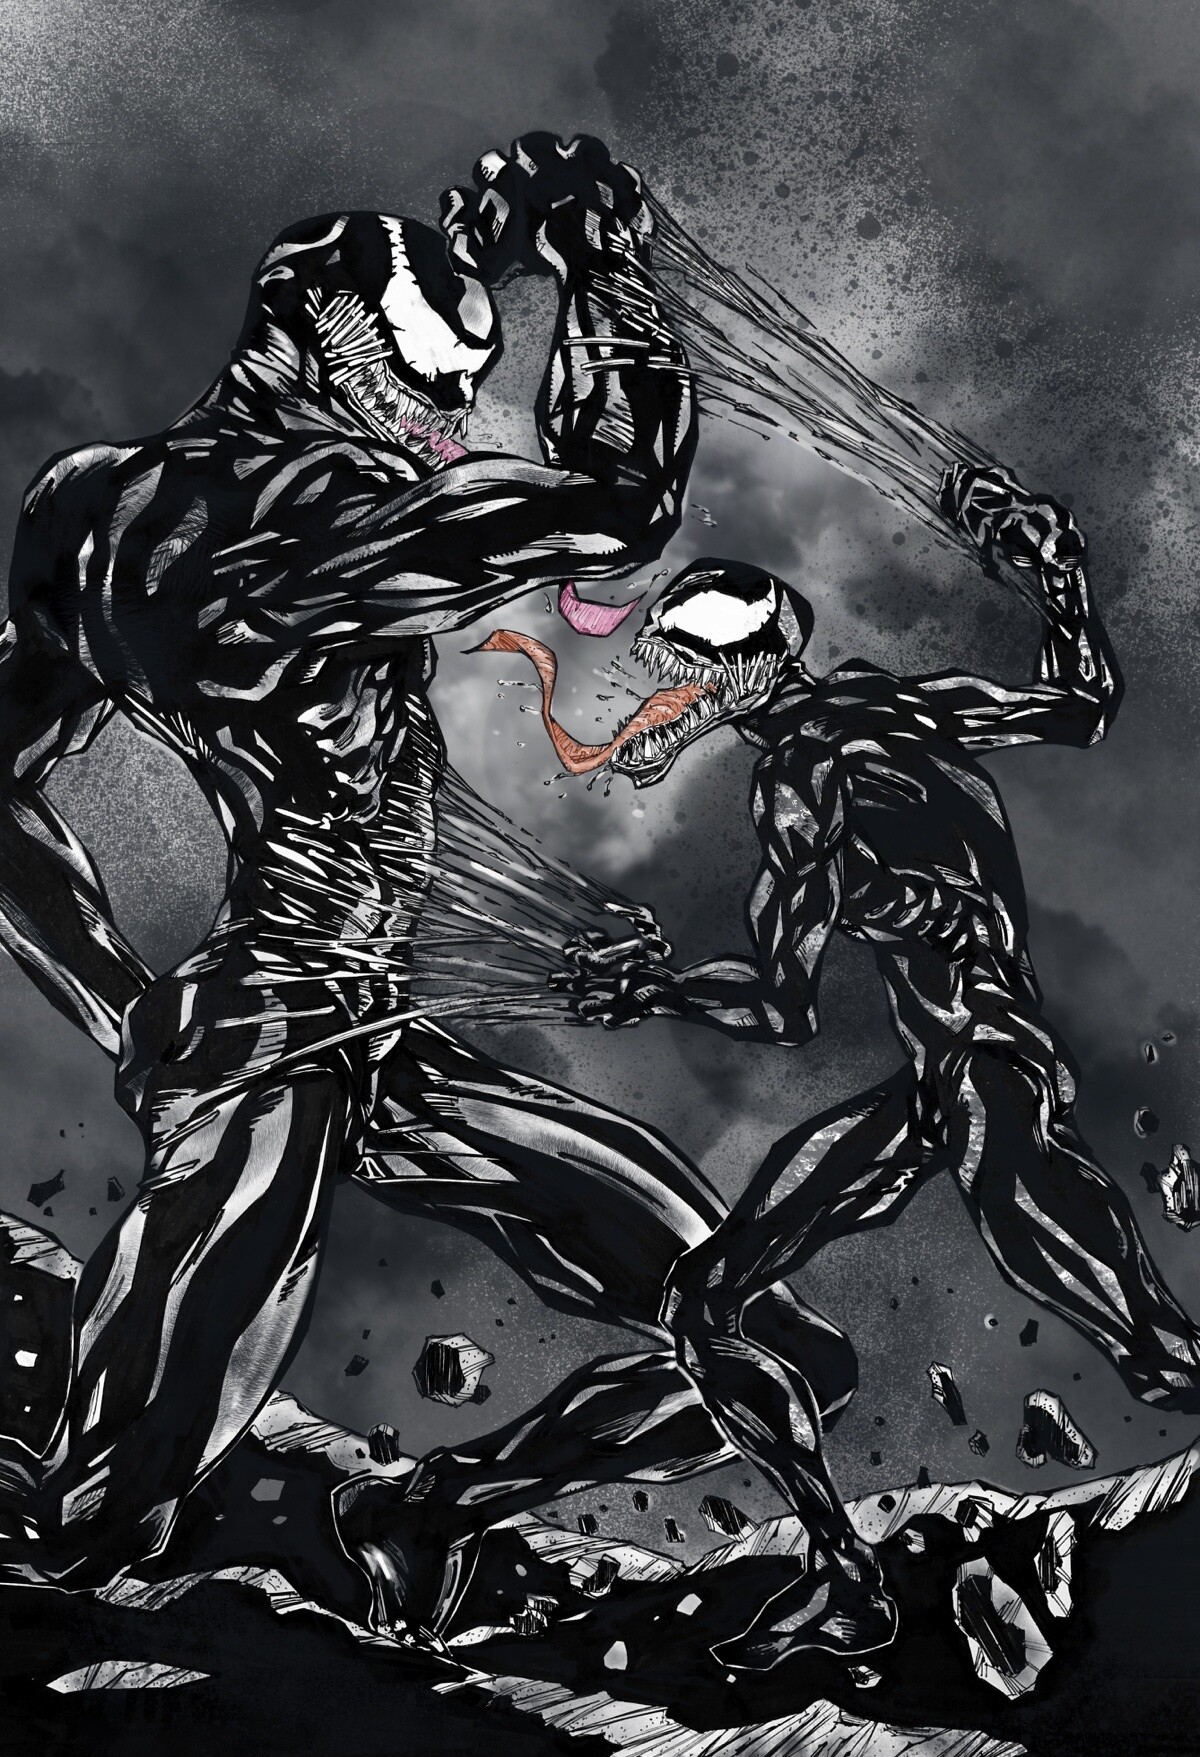 Venom illustration, fabrizio pacitti 